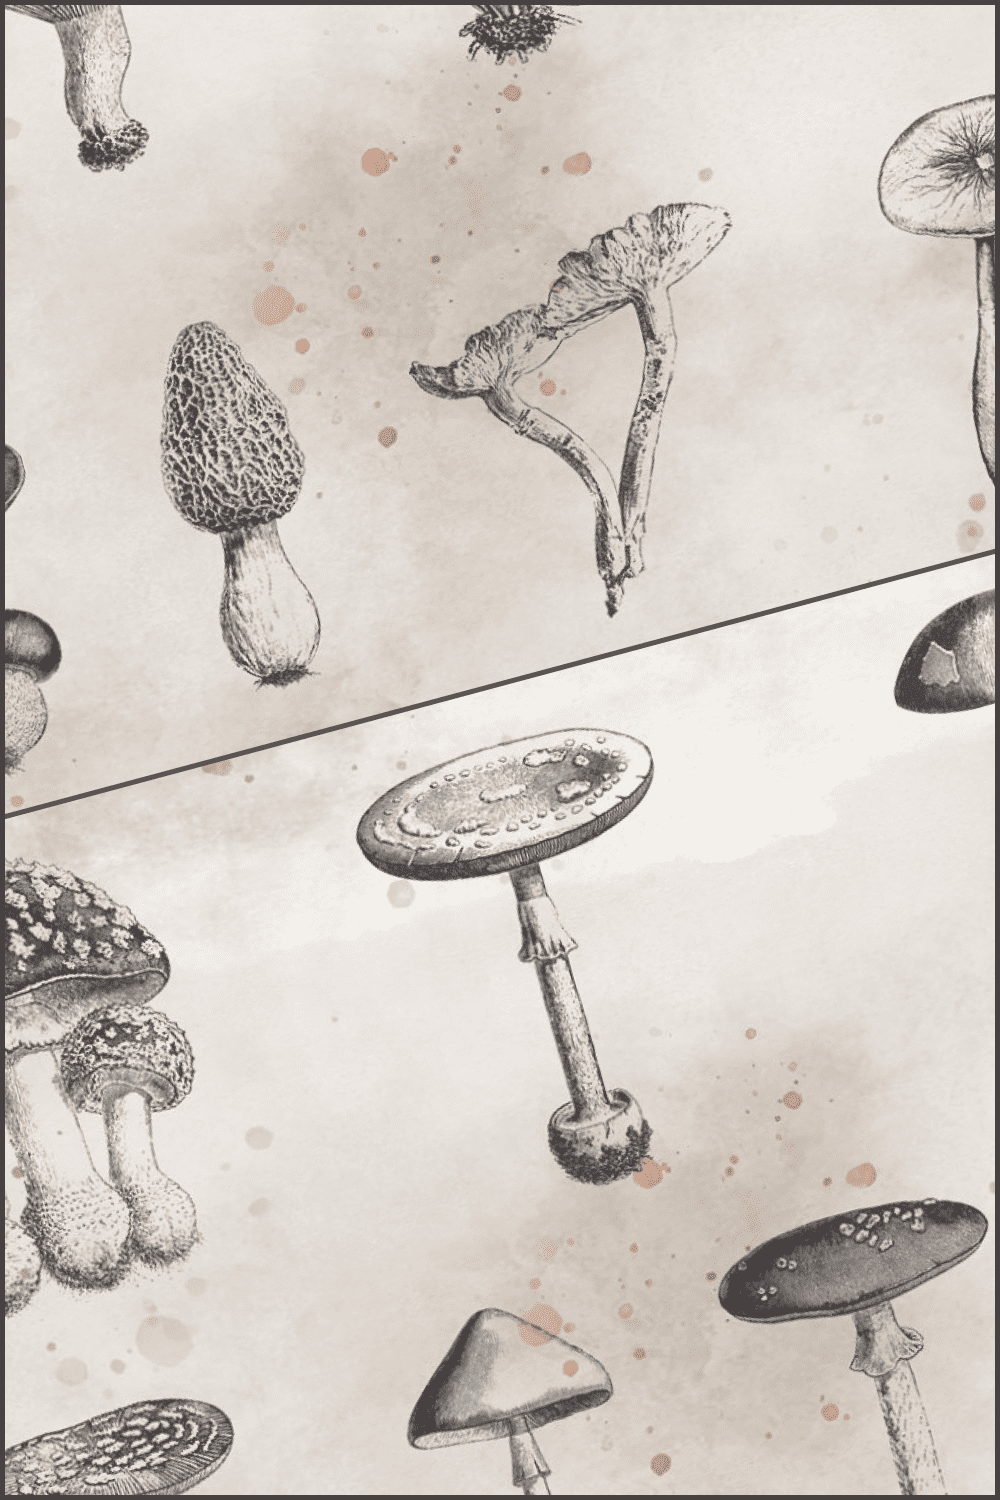 Vintage vectorized mushroom clipart - Pinterest image preview.